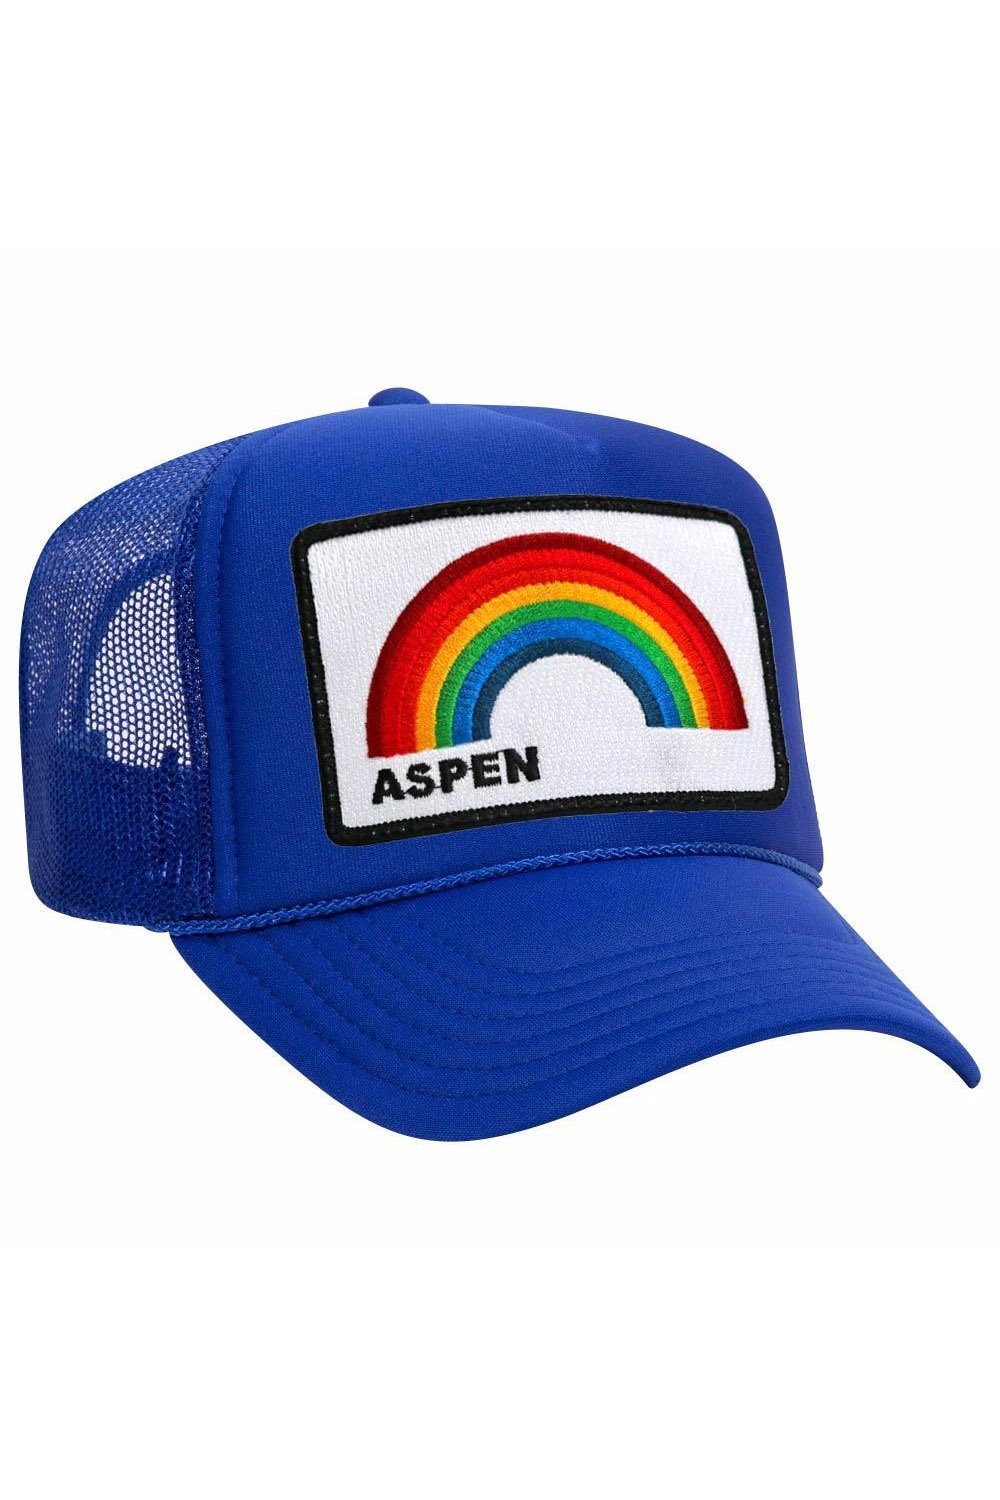 ASPEN RAINBOW TRUCKER HAT HATS Aviator Nation OS ROYAL 